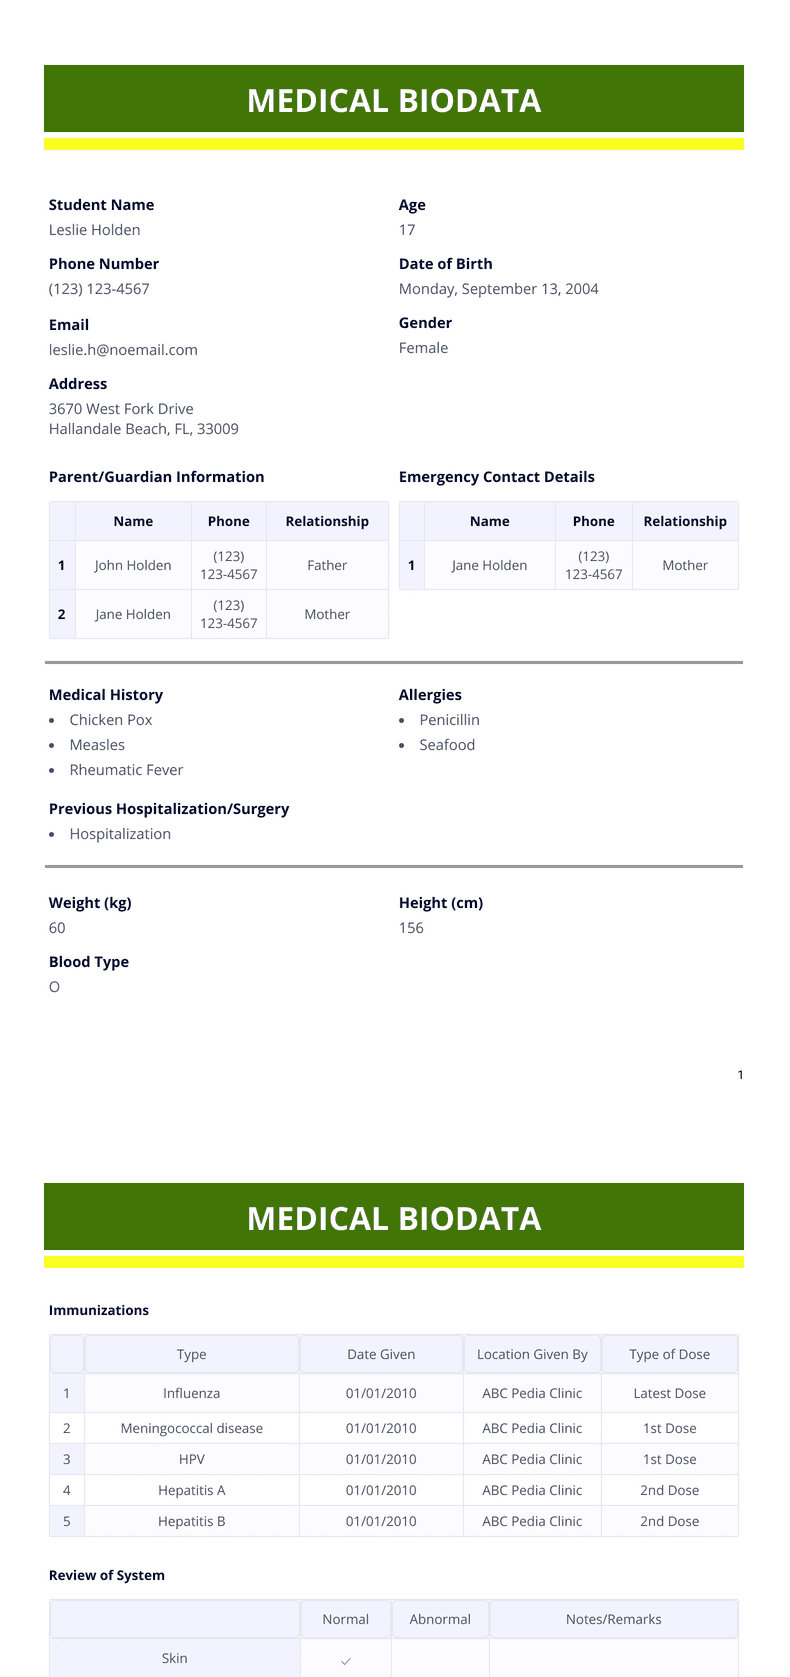 Medical Biodata